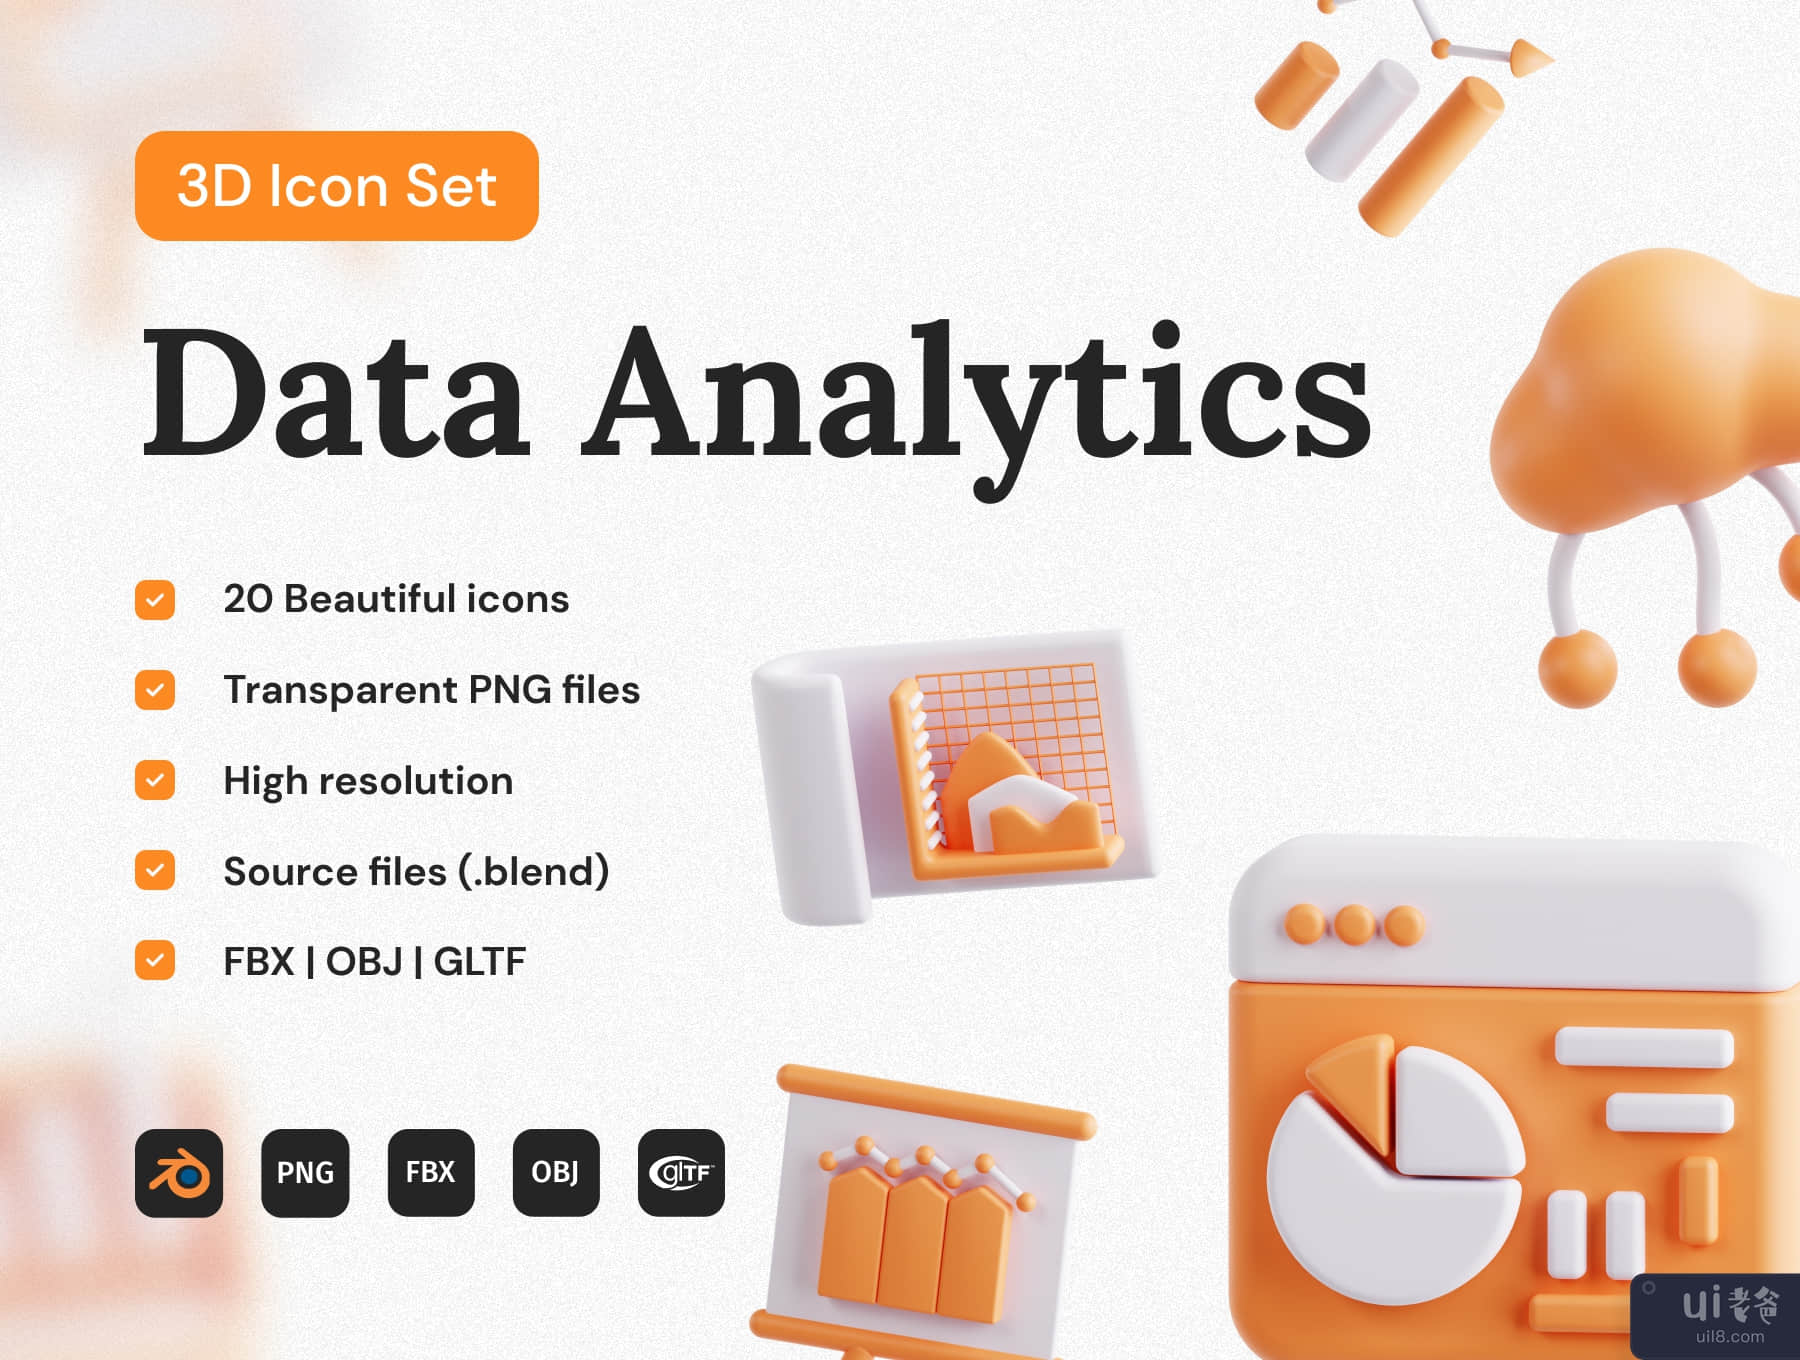 数据分析 3D 图标集 (Data Analytics 3D Icon Set)插图7